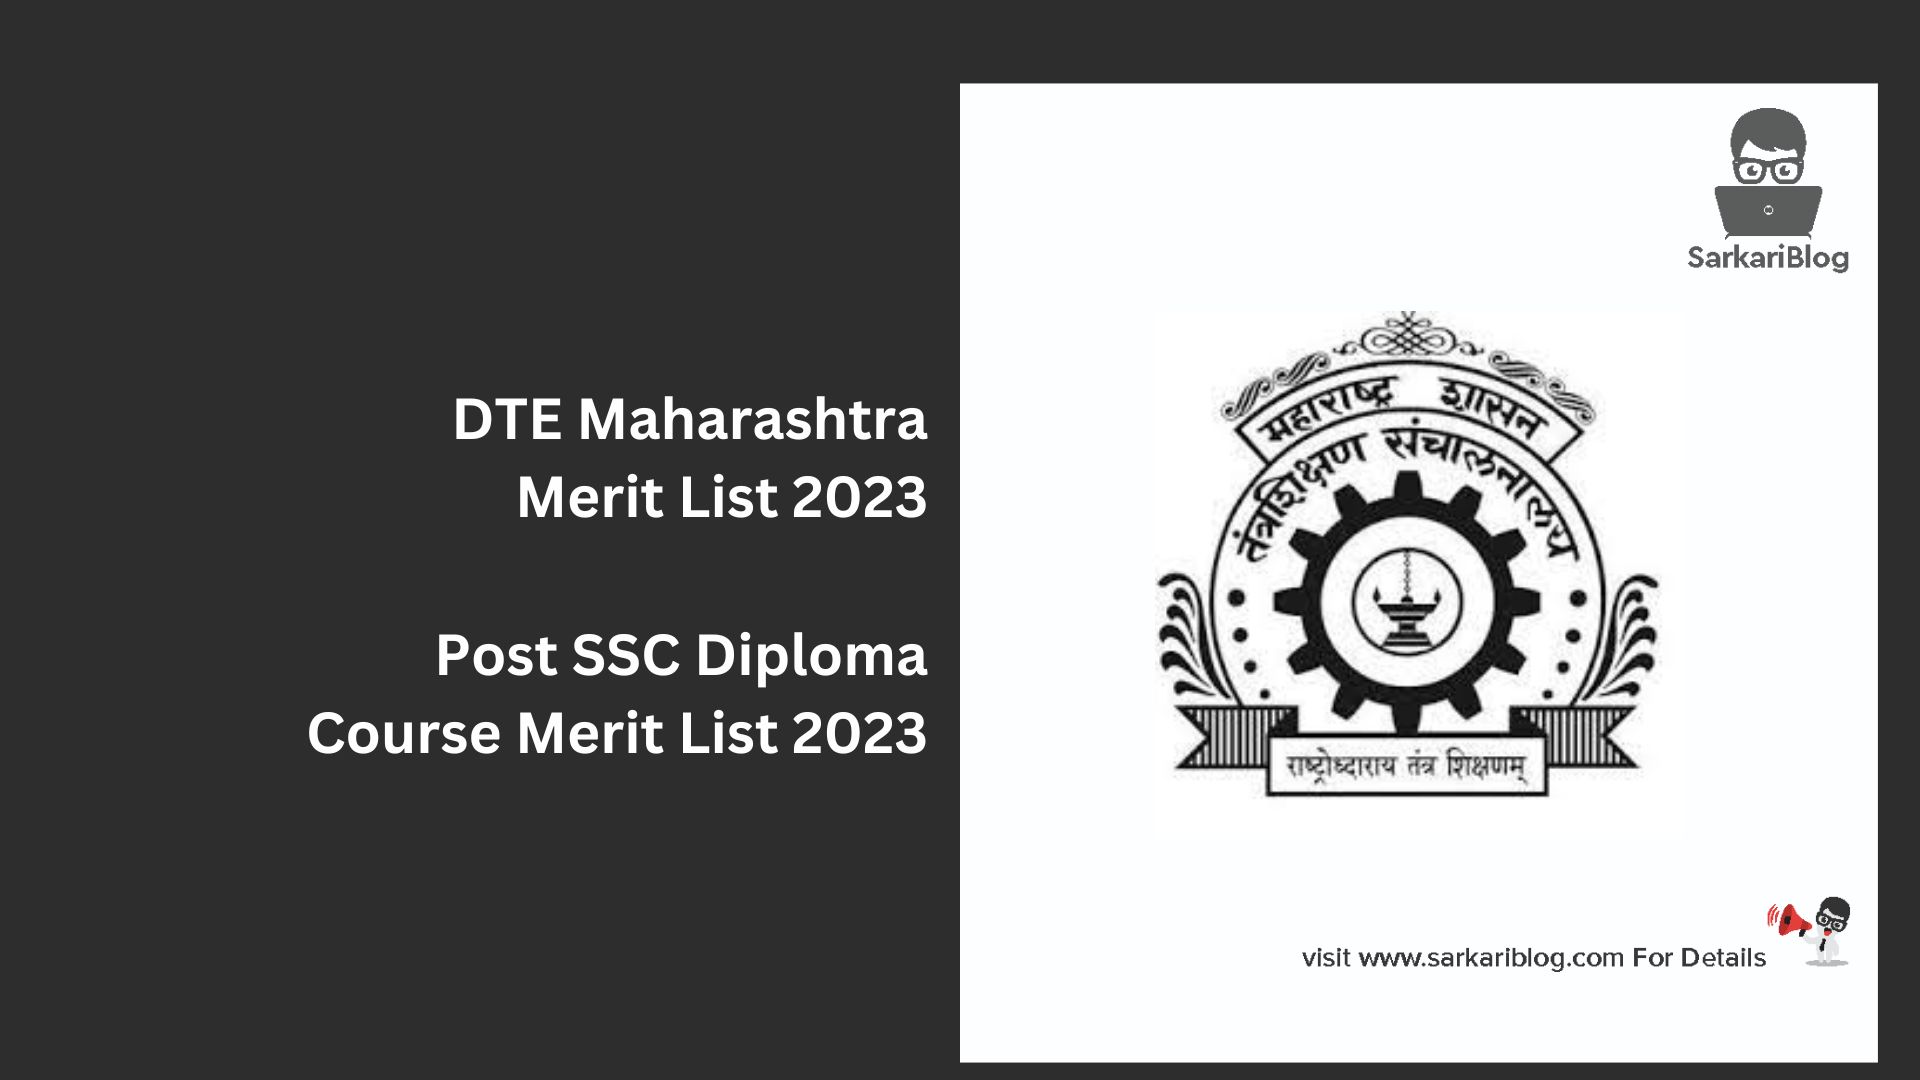 DTE Maharashtra Merit List 2023